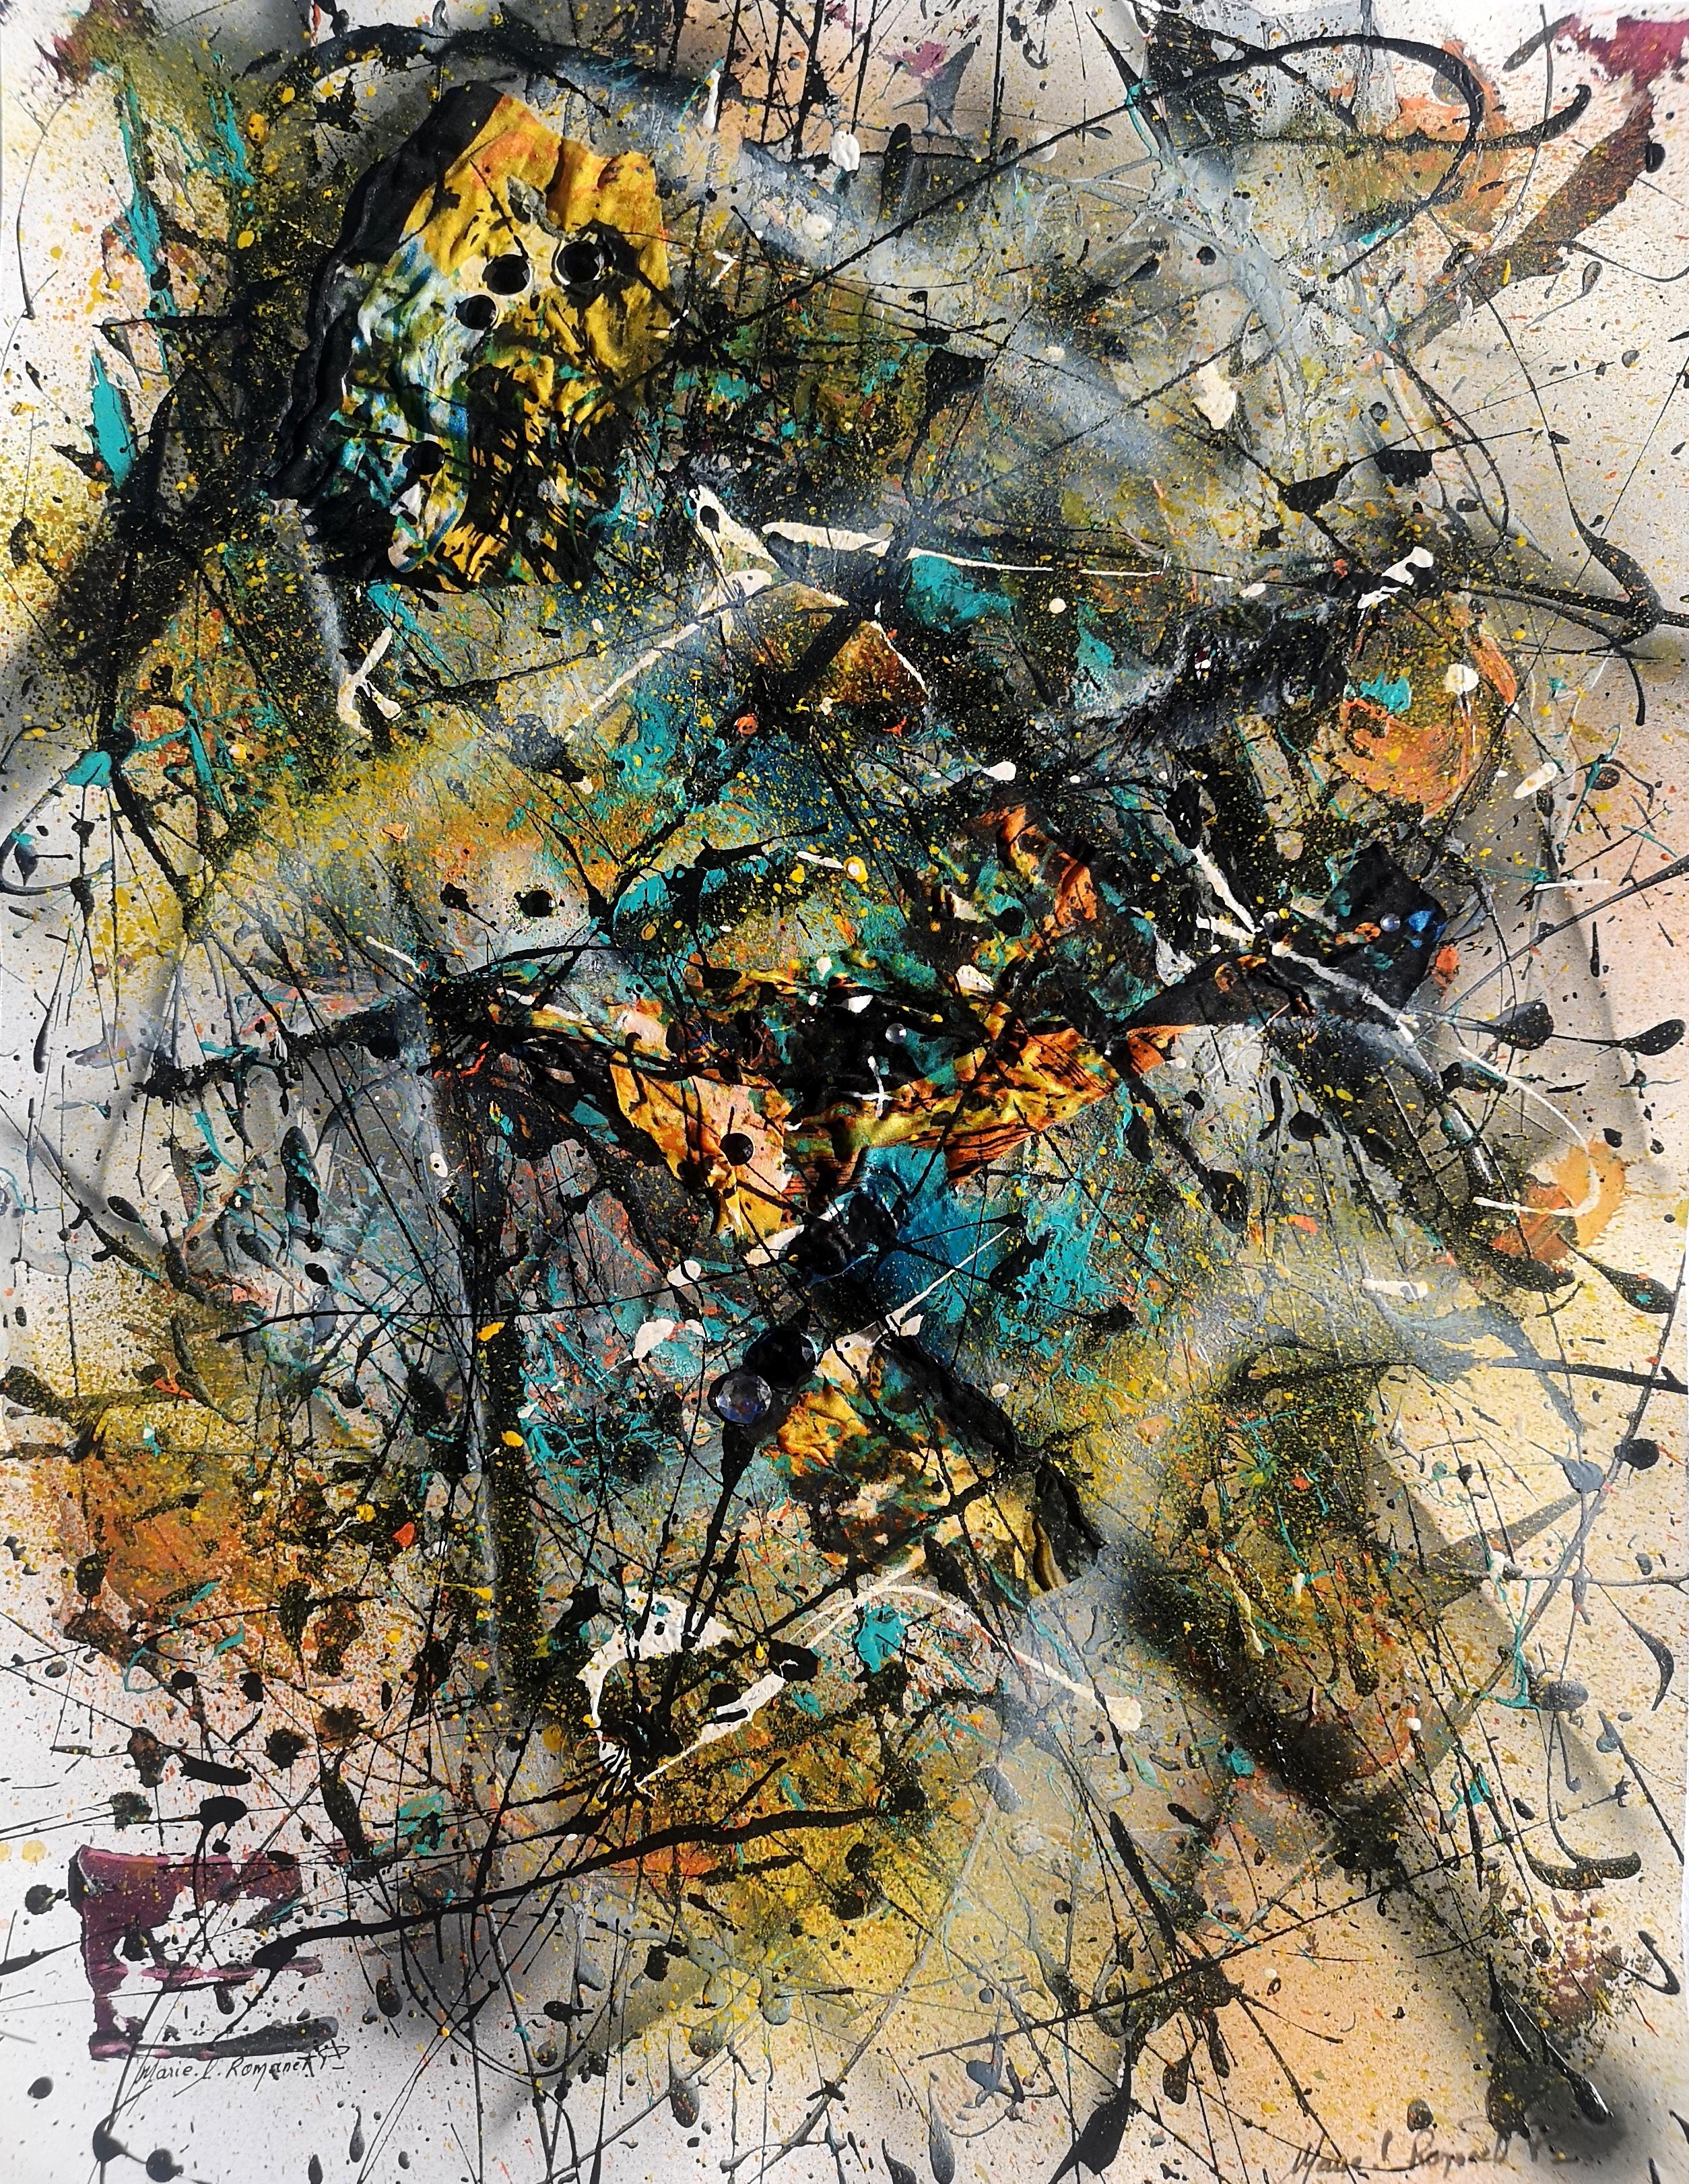 "LES FRUITS DE L'ACTE" Pollock style - Mixed Media Art by Marie-Laure Romanet Prin company